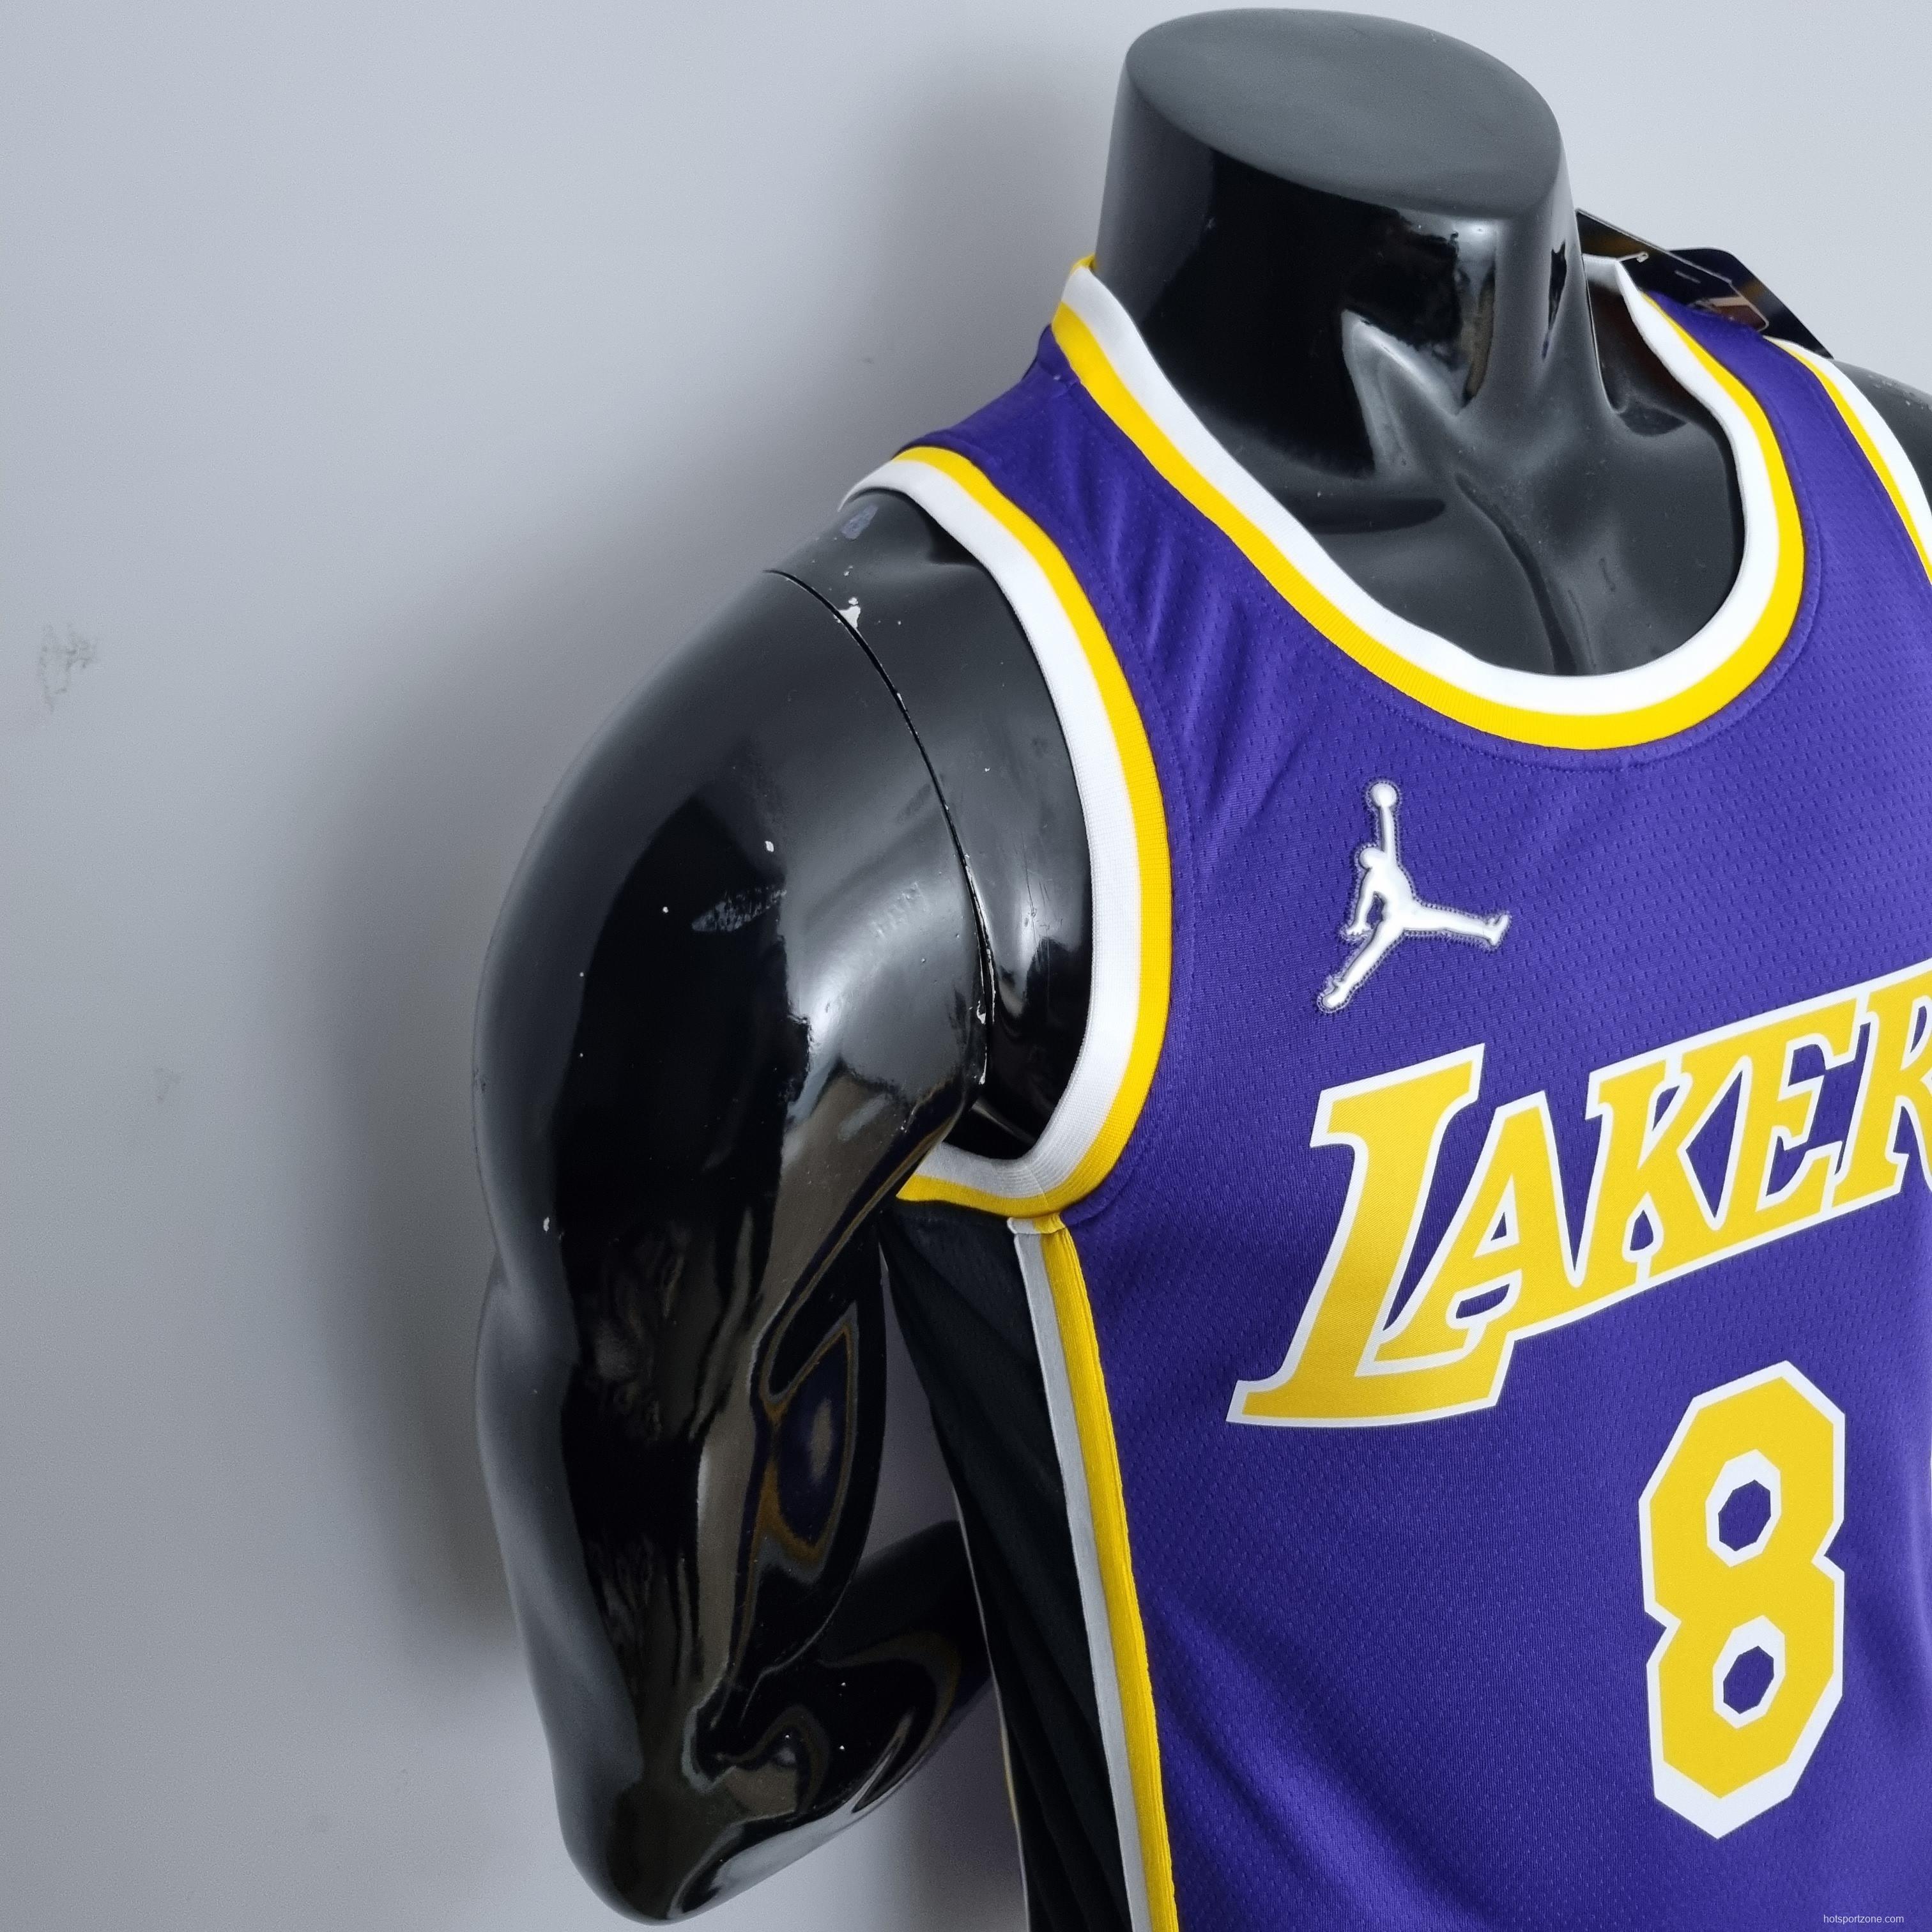 75th Anniversary BRYANT#8 Los Angeles Lakers Jordan Purple NBA Jersey